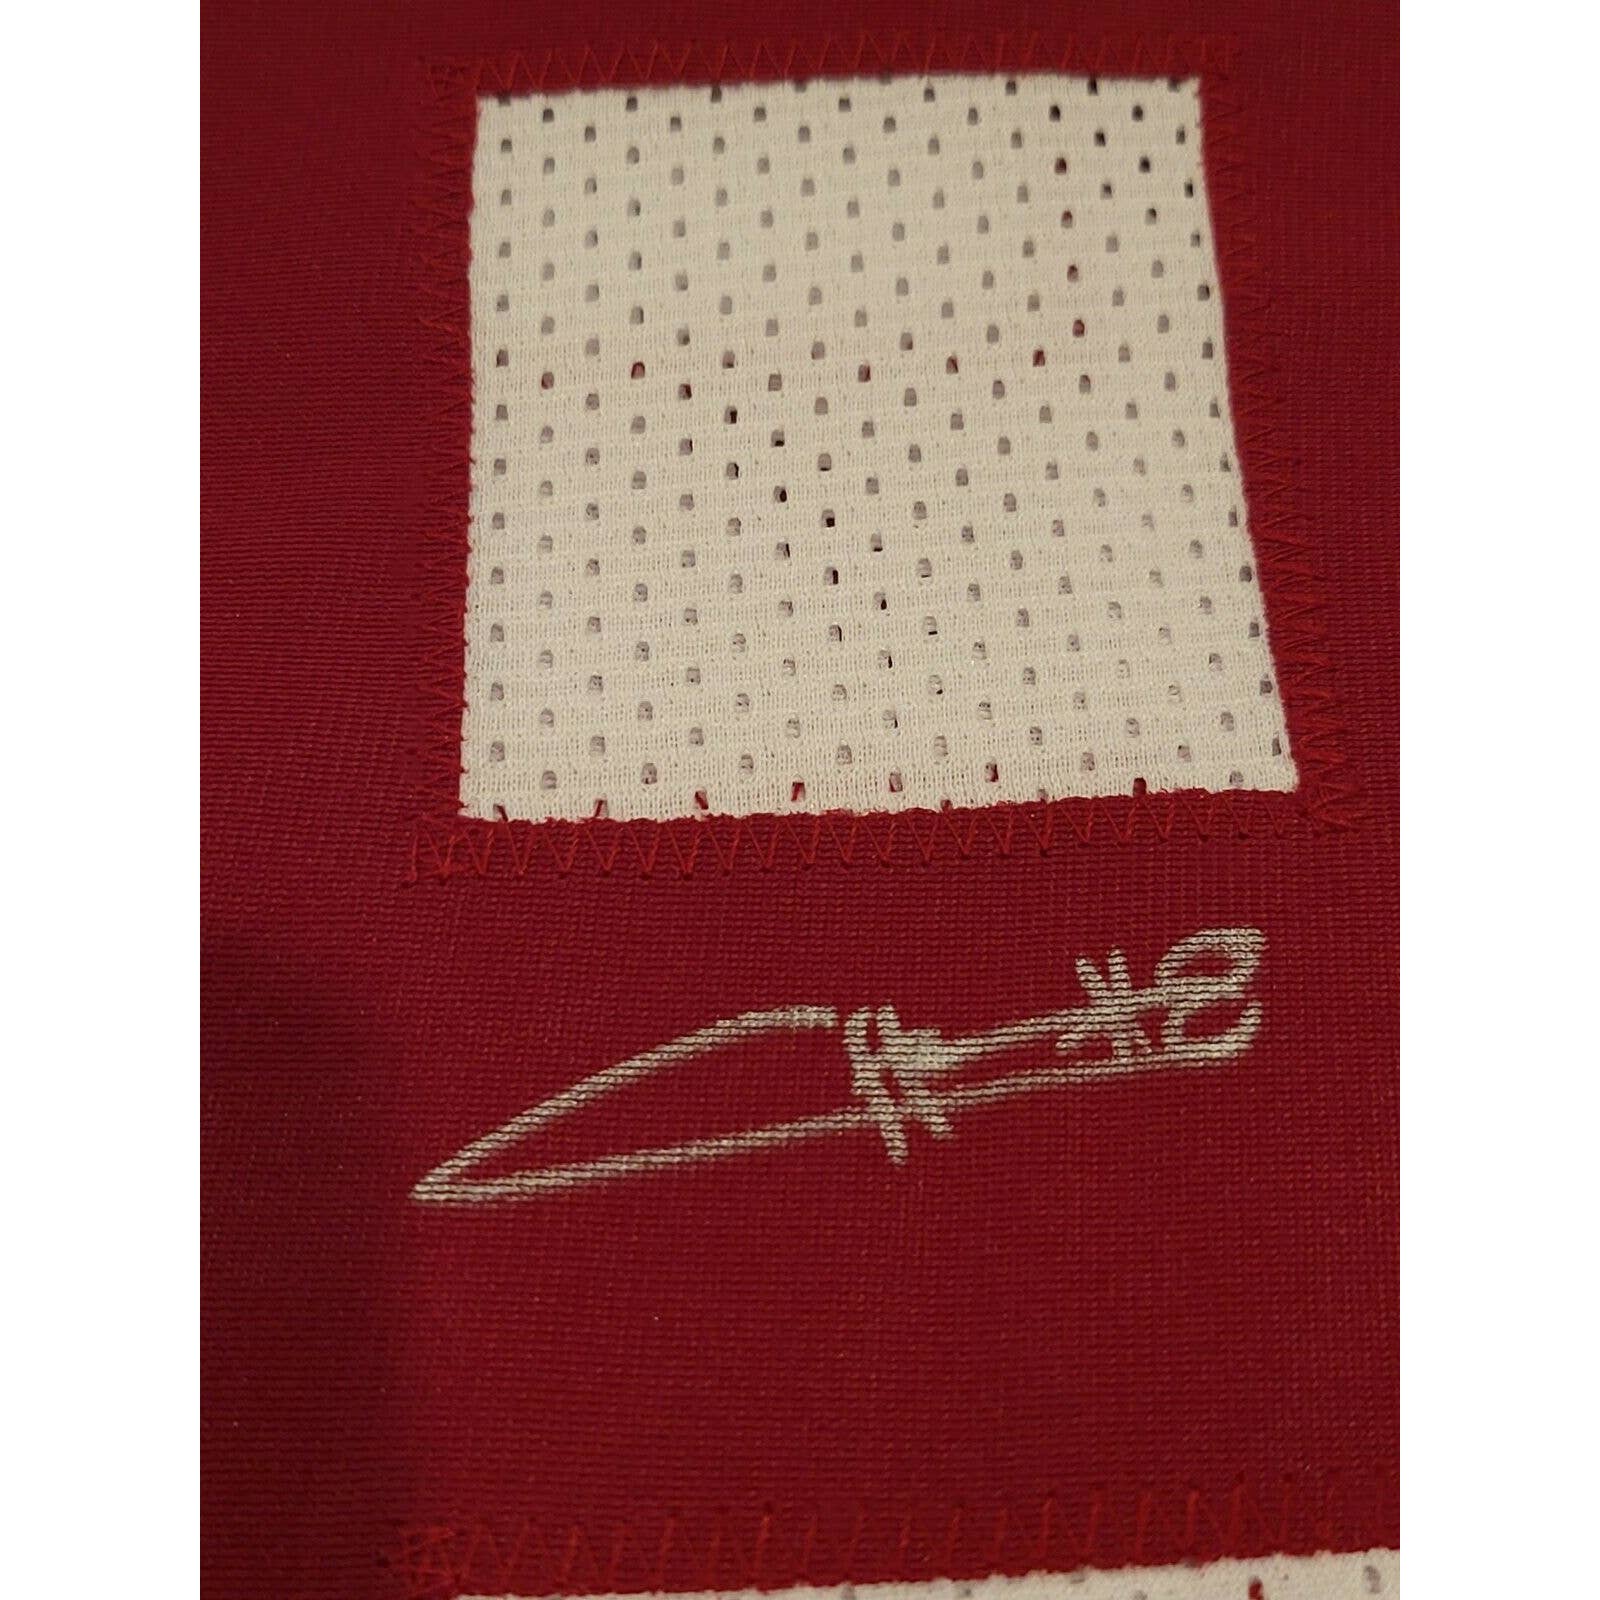 Christian Harris Autographed/Signed Jersey Beckett Sticker Alabama Crimson Tide - TreasuresEvolved